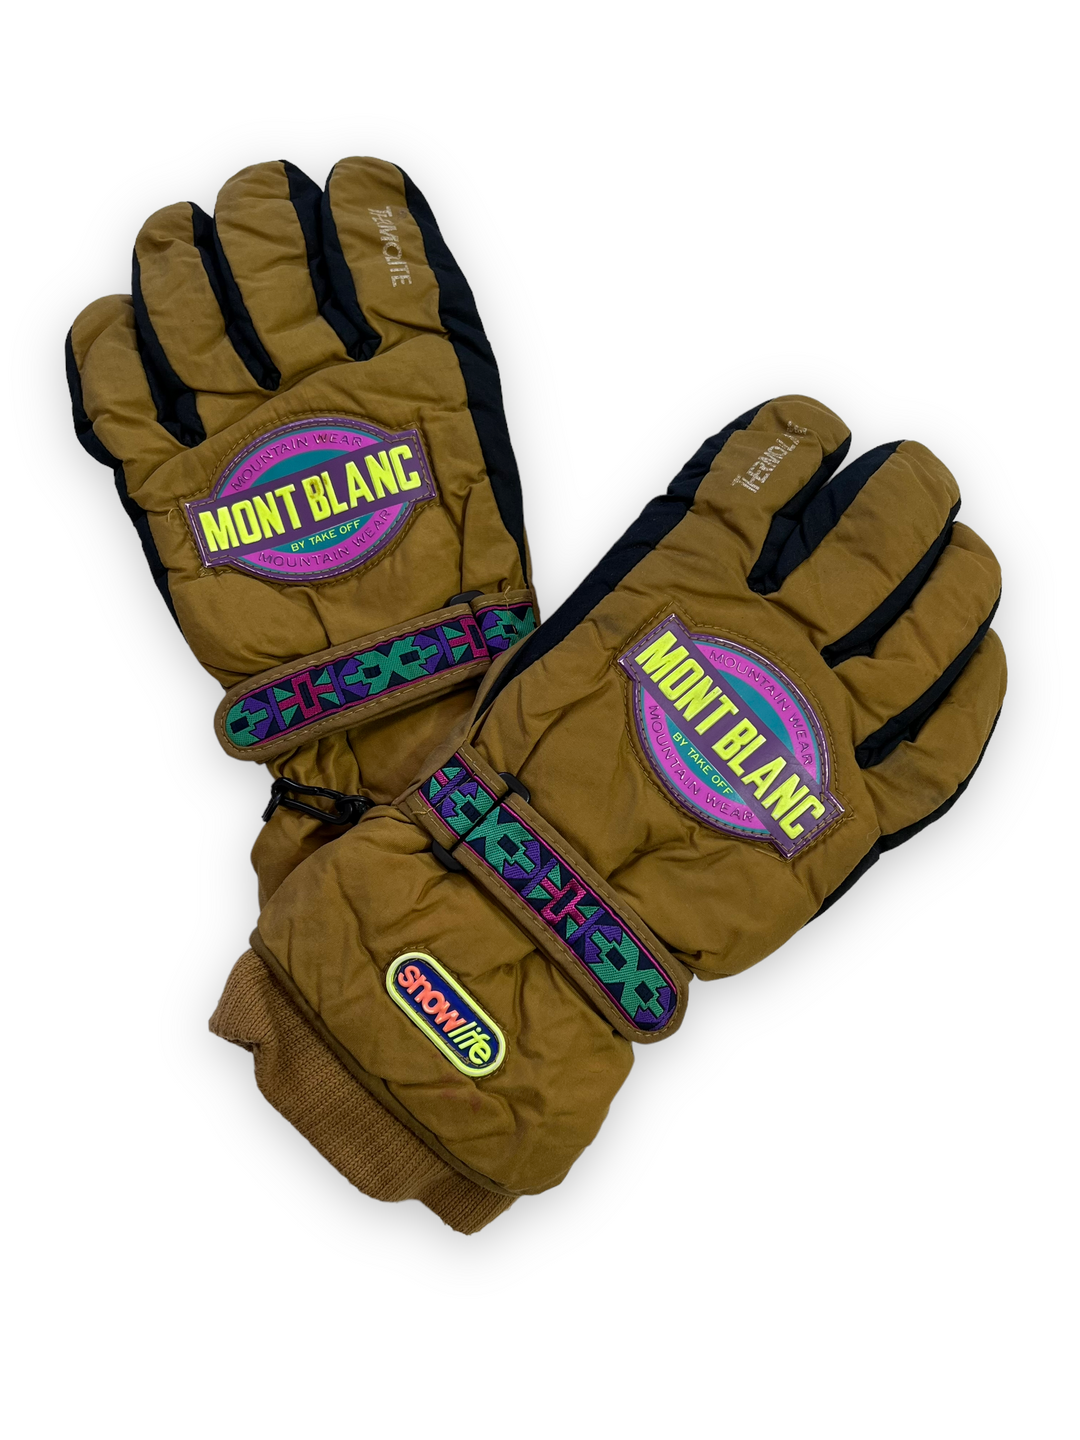 80's Ski Gloves Men's Large